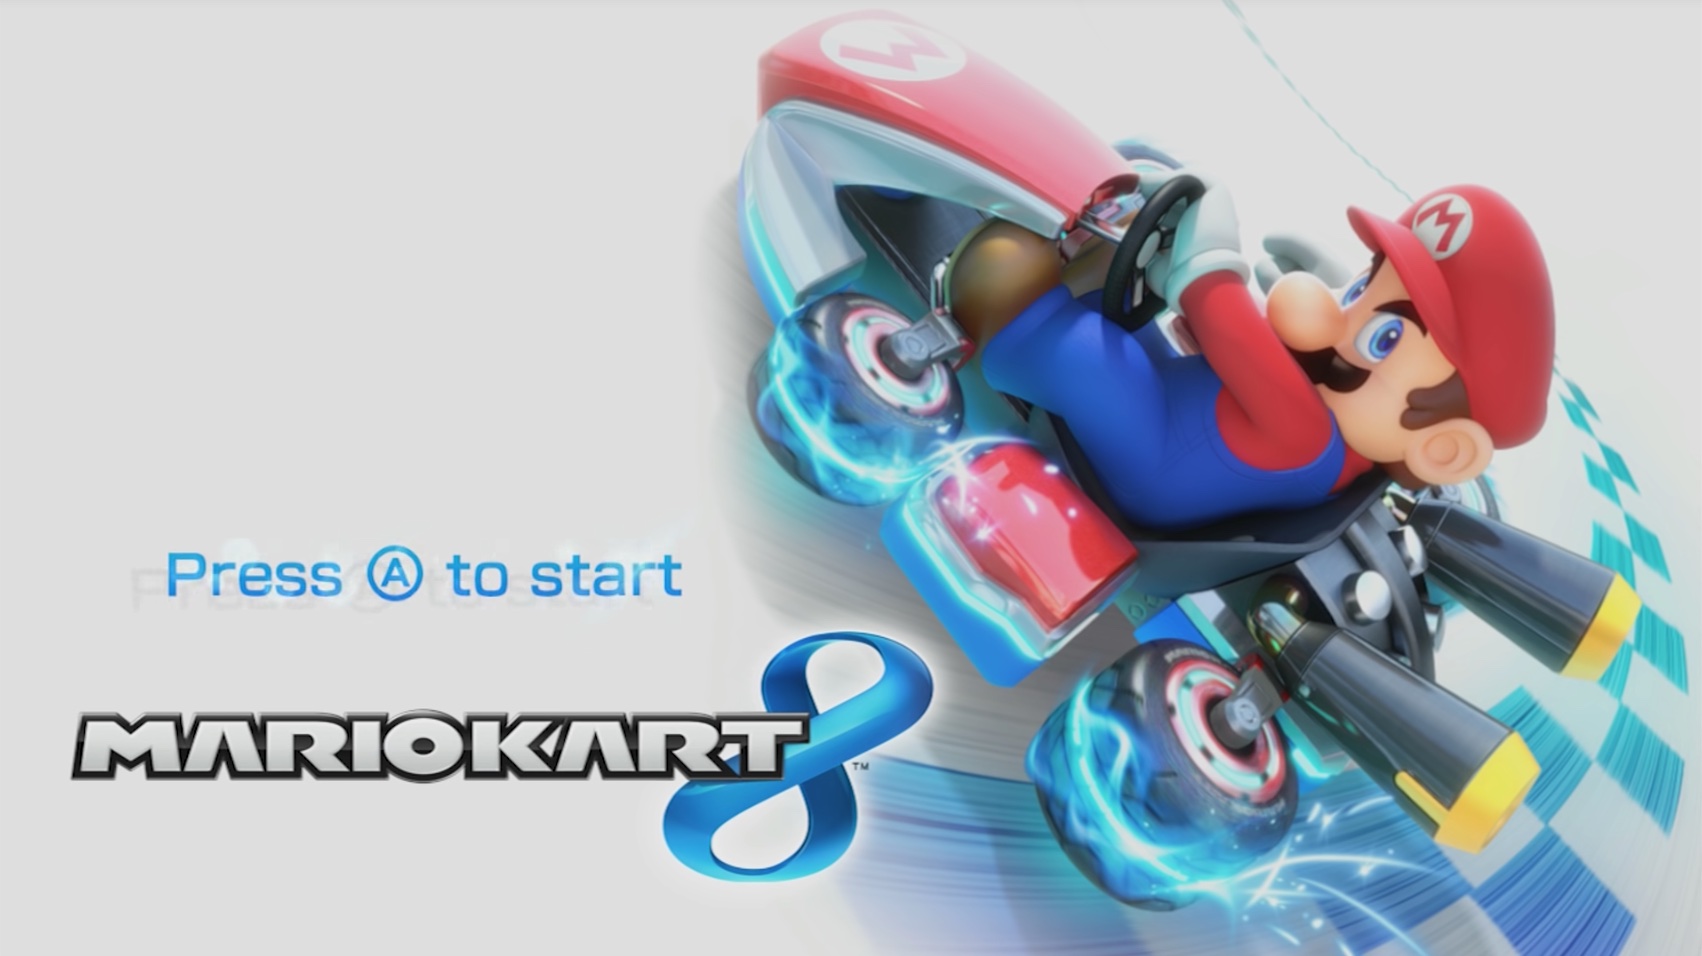 Mario Kart 8 title screen (2014)